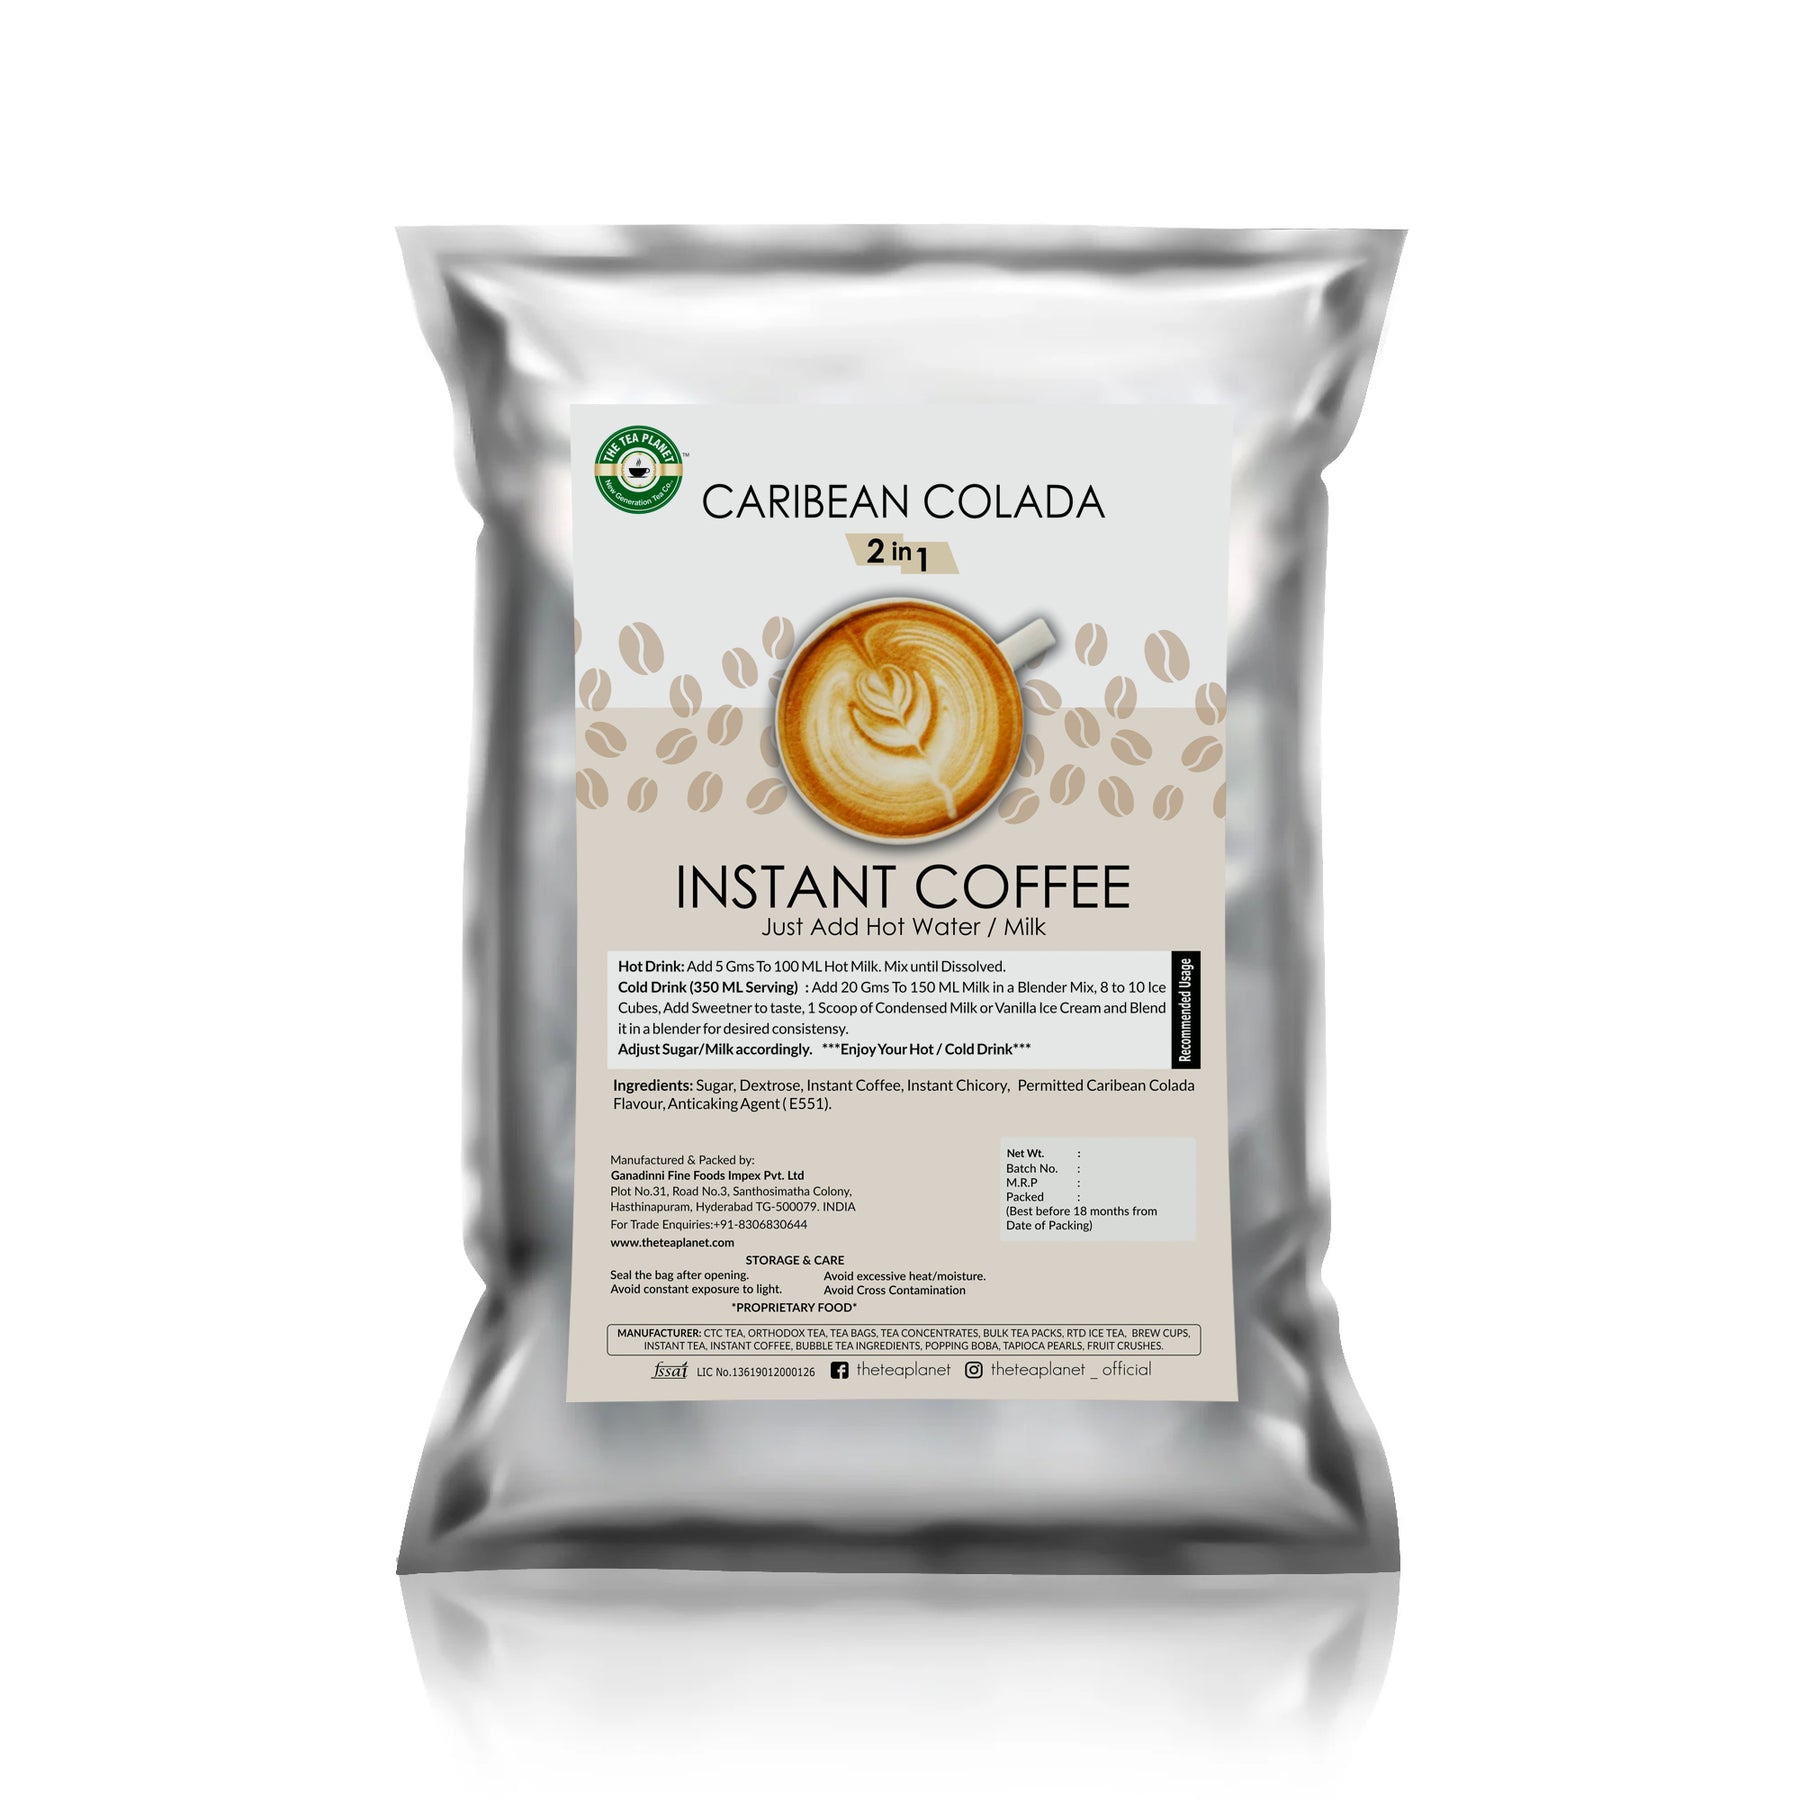 Carribean Coloda Coffee Premix (2 in 1)